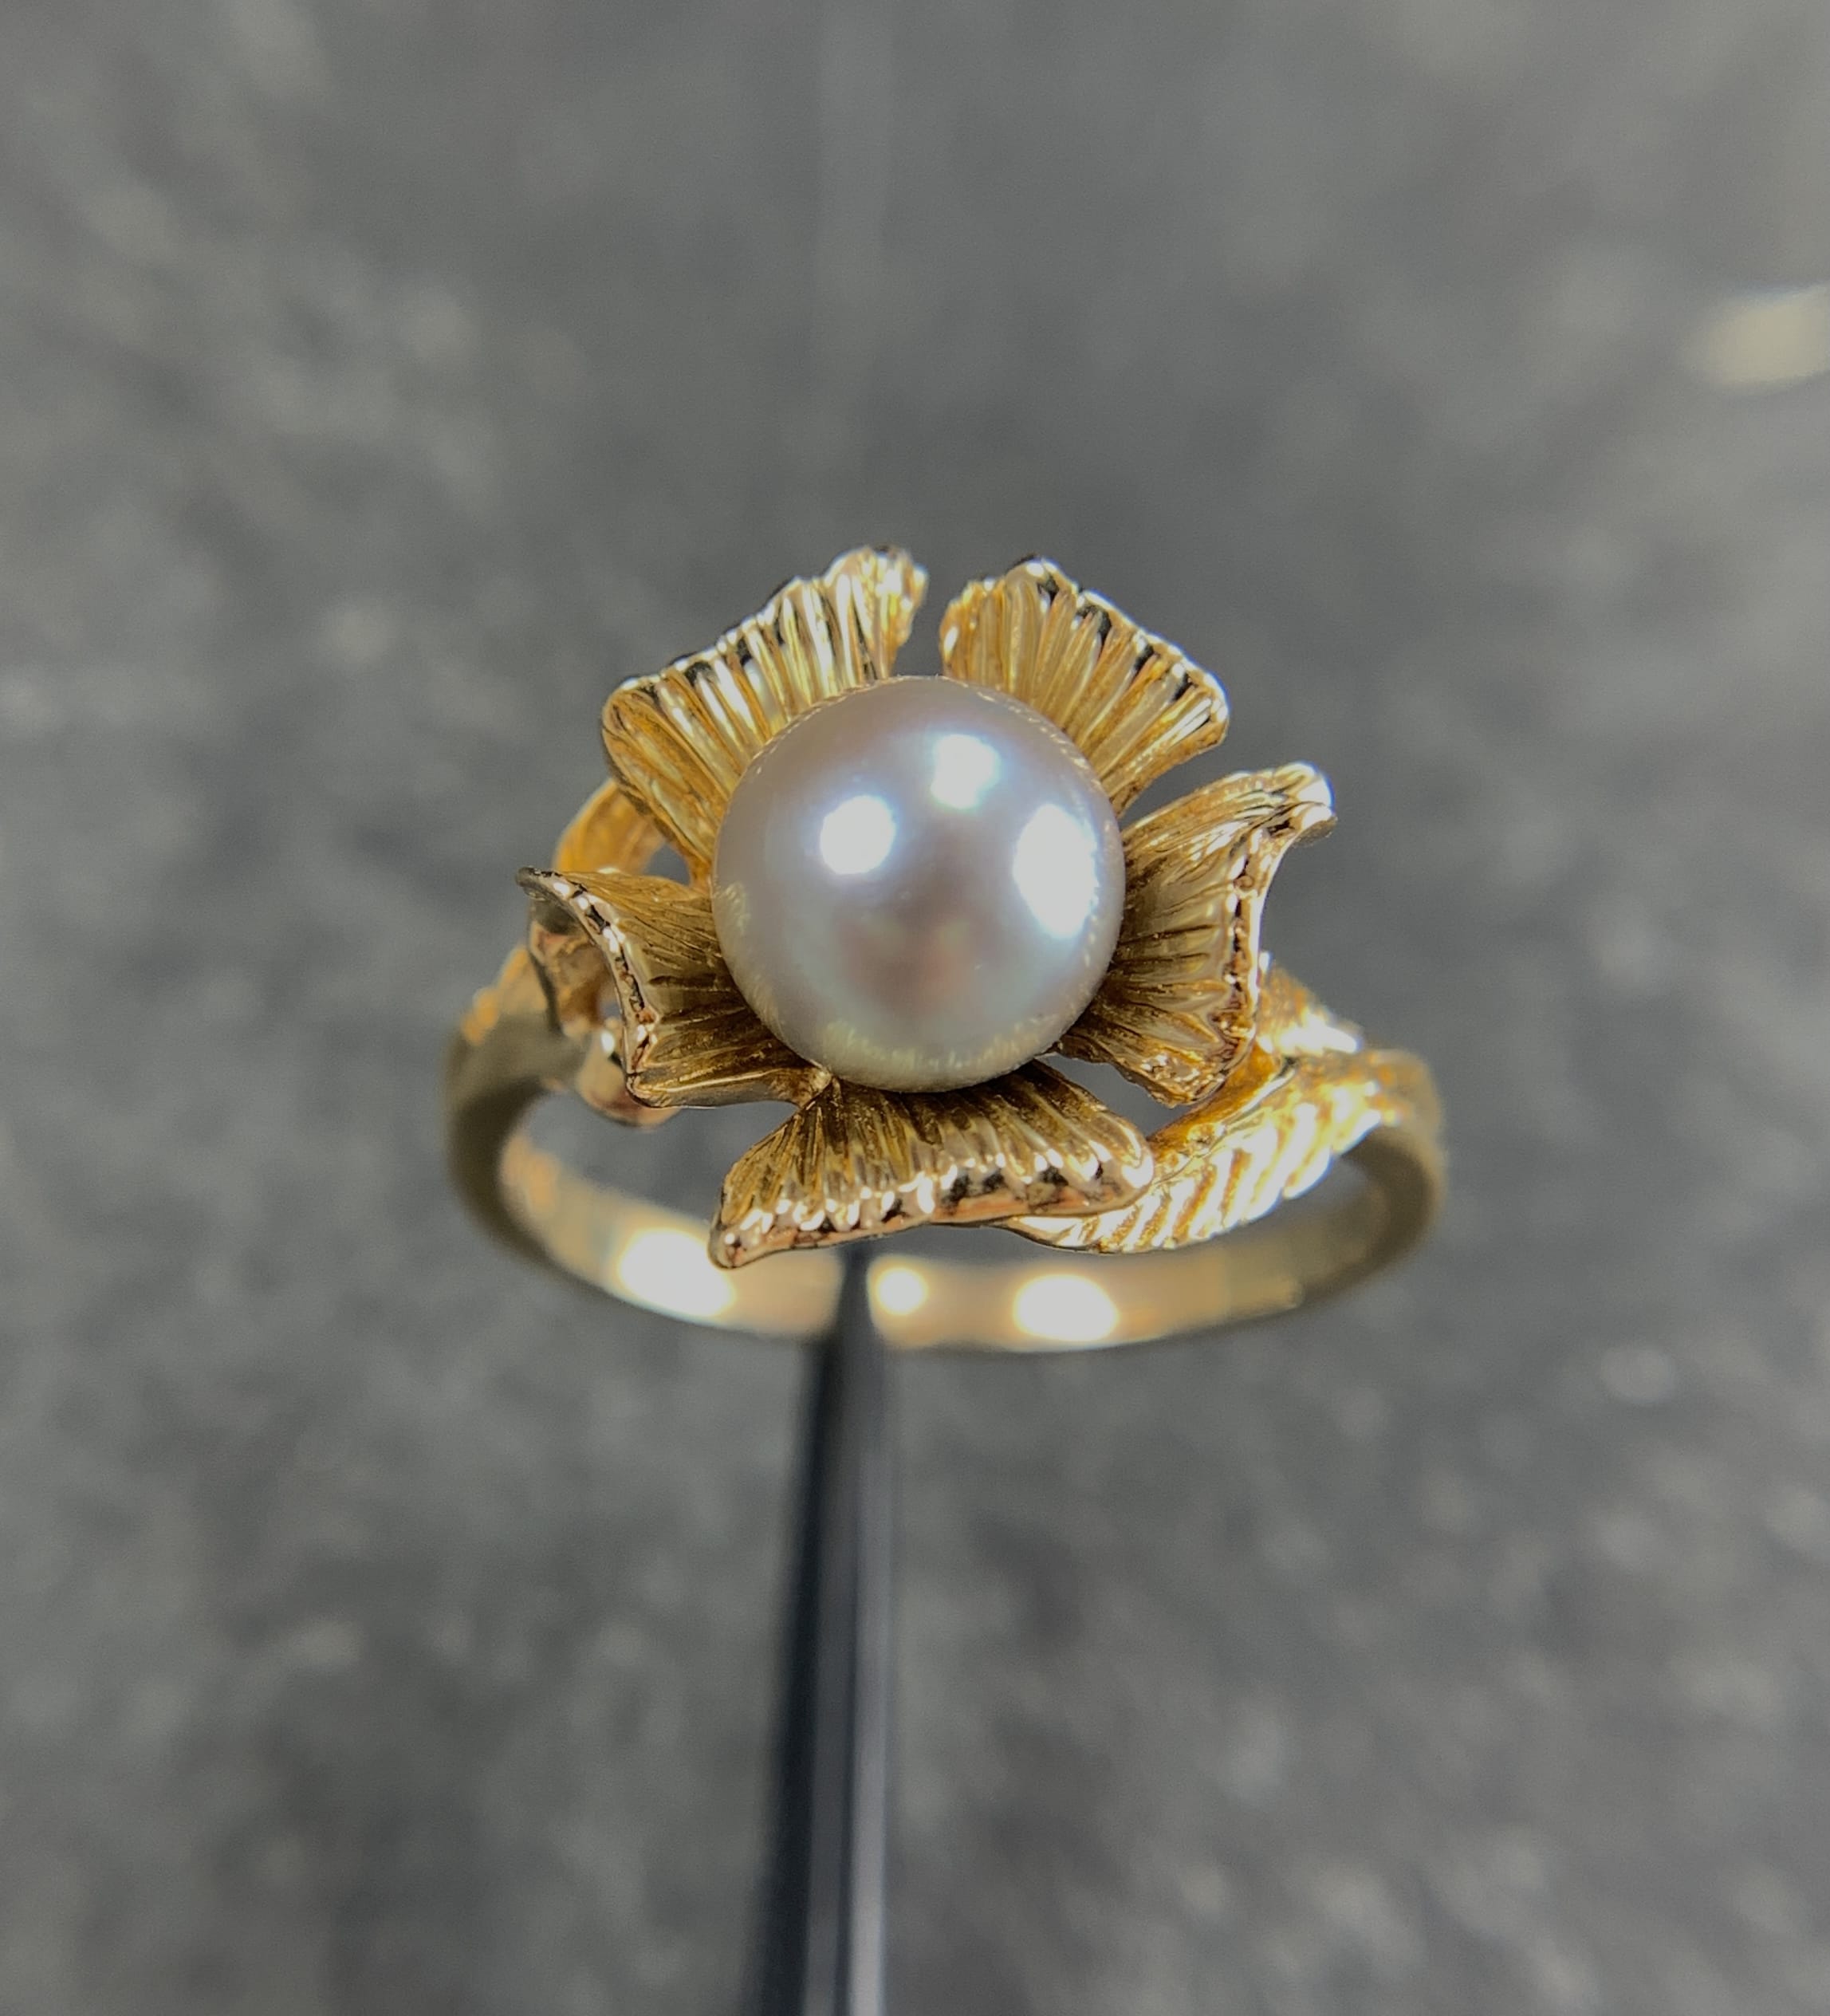 New flower pearl ring women gold